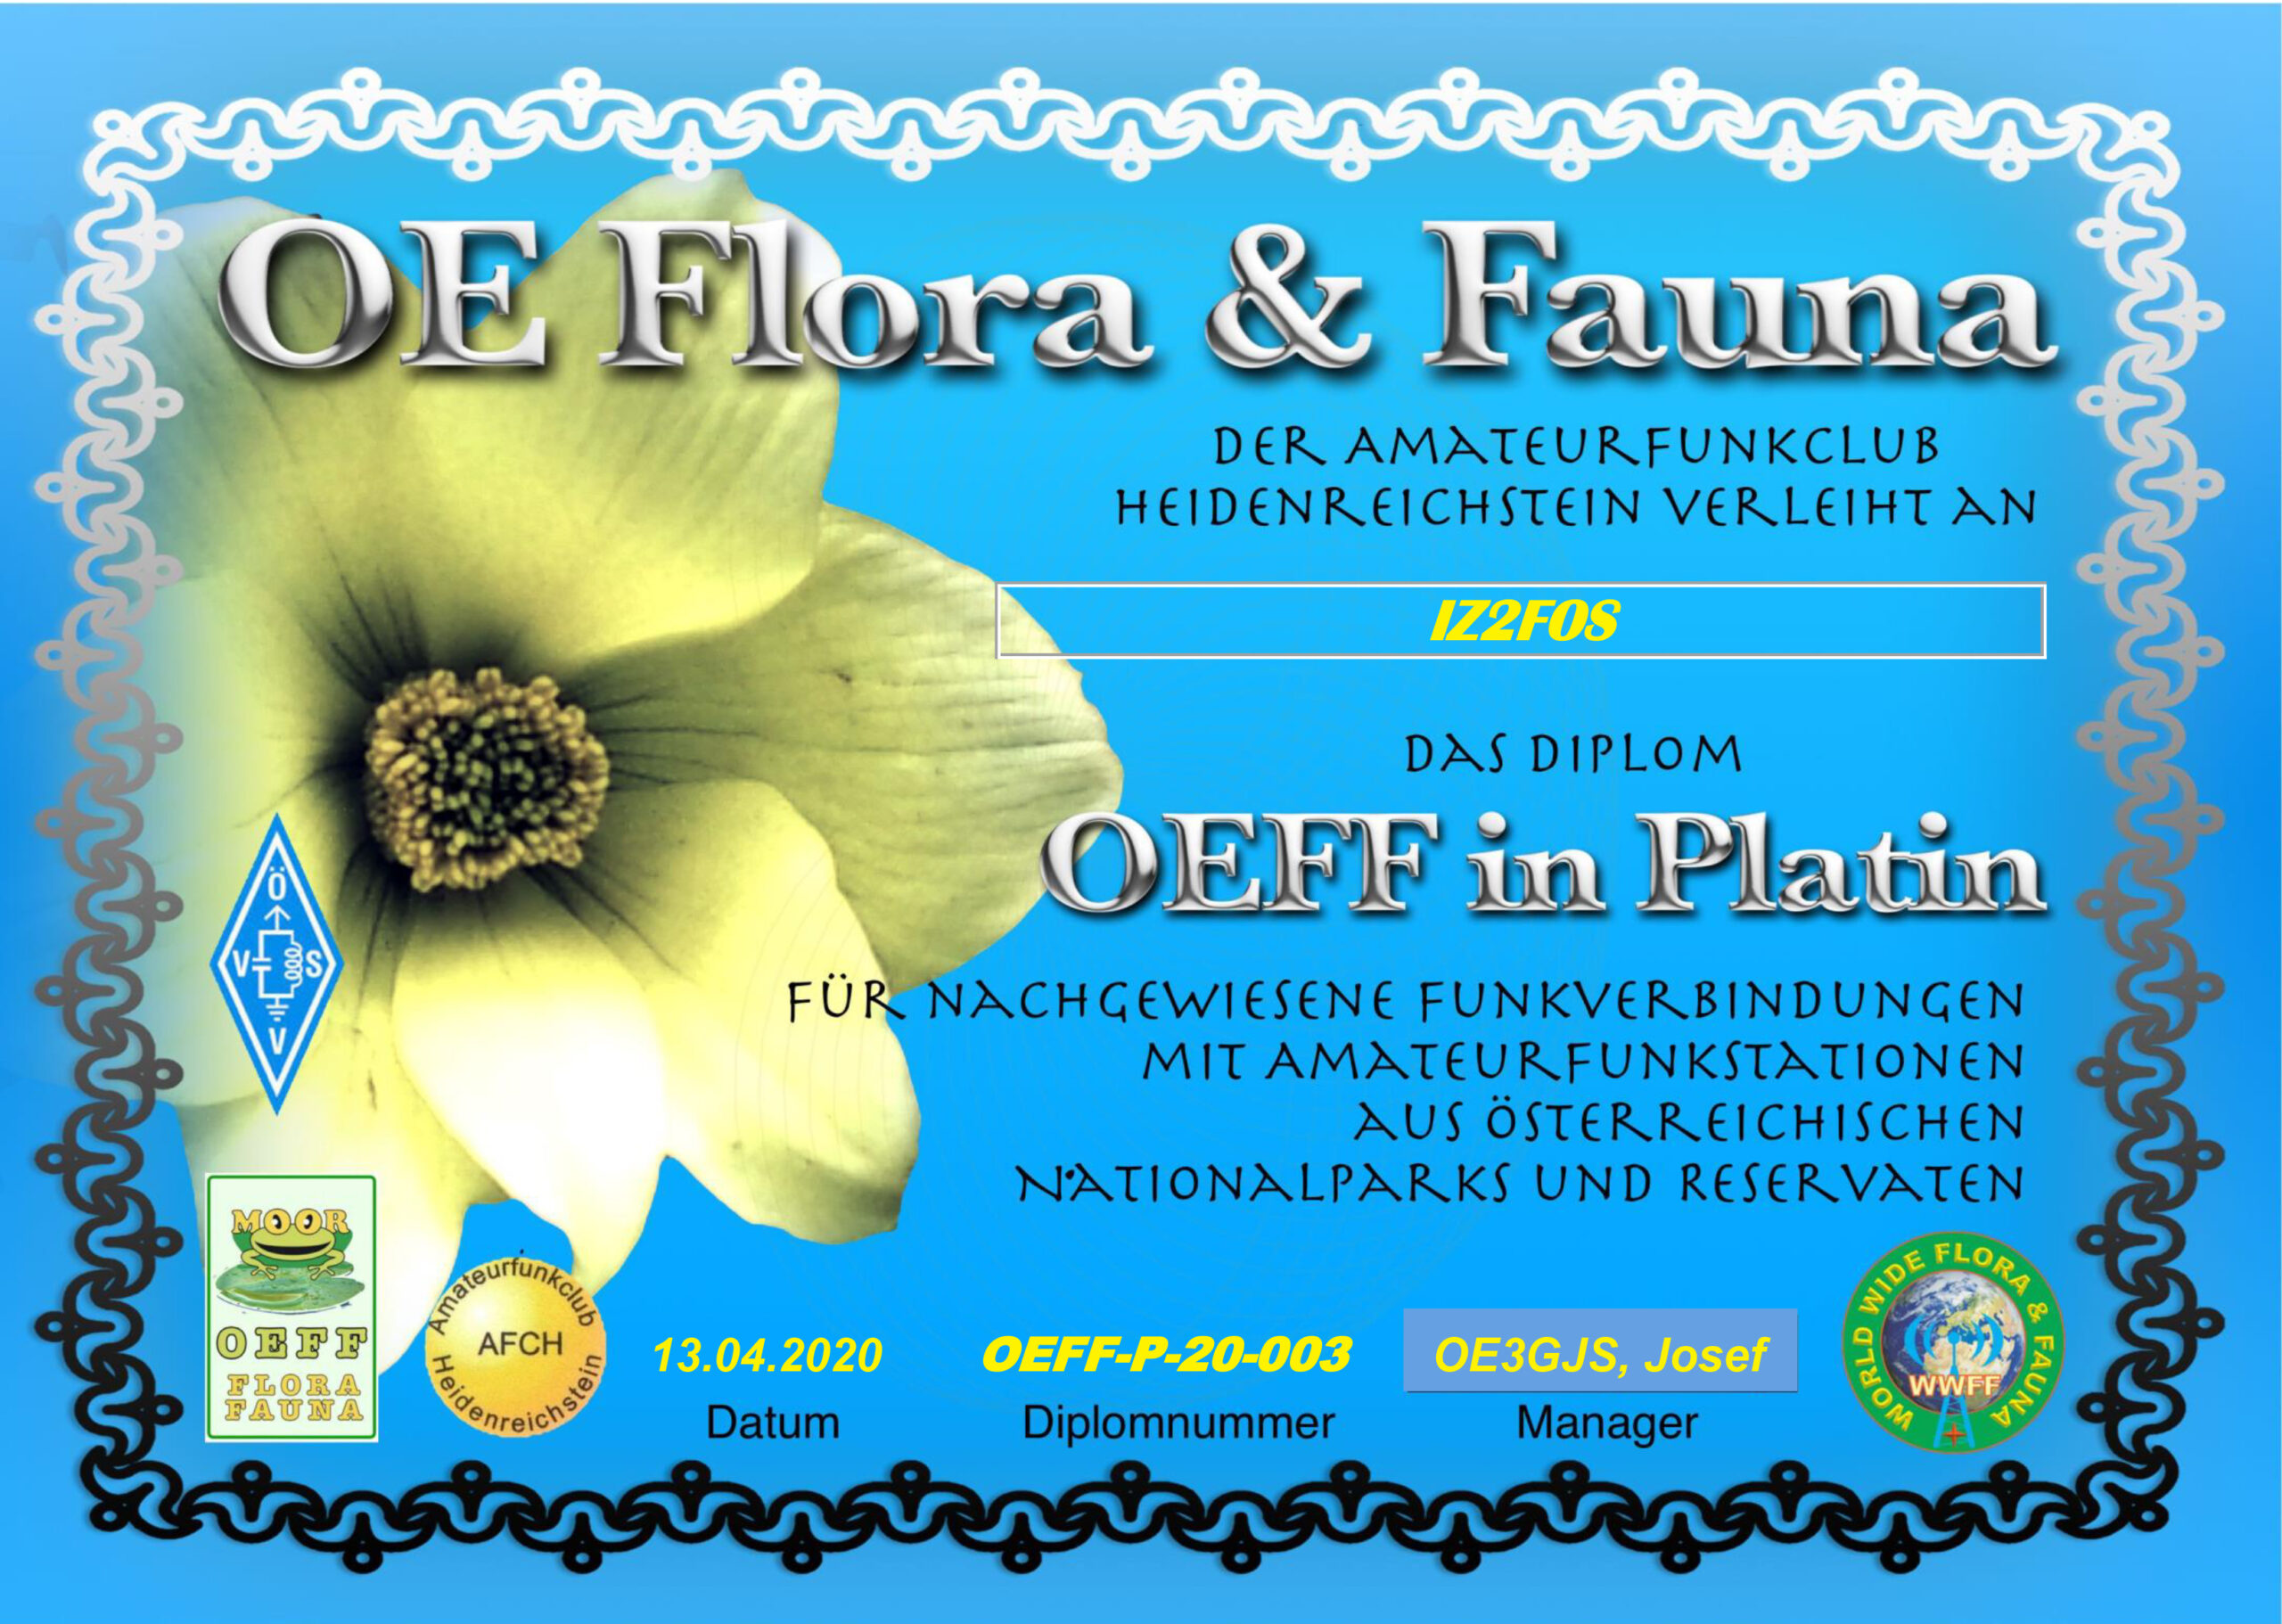 OEFF_Platin_P-20-003_IZ2FOS_13.04.2020-1-scaled